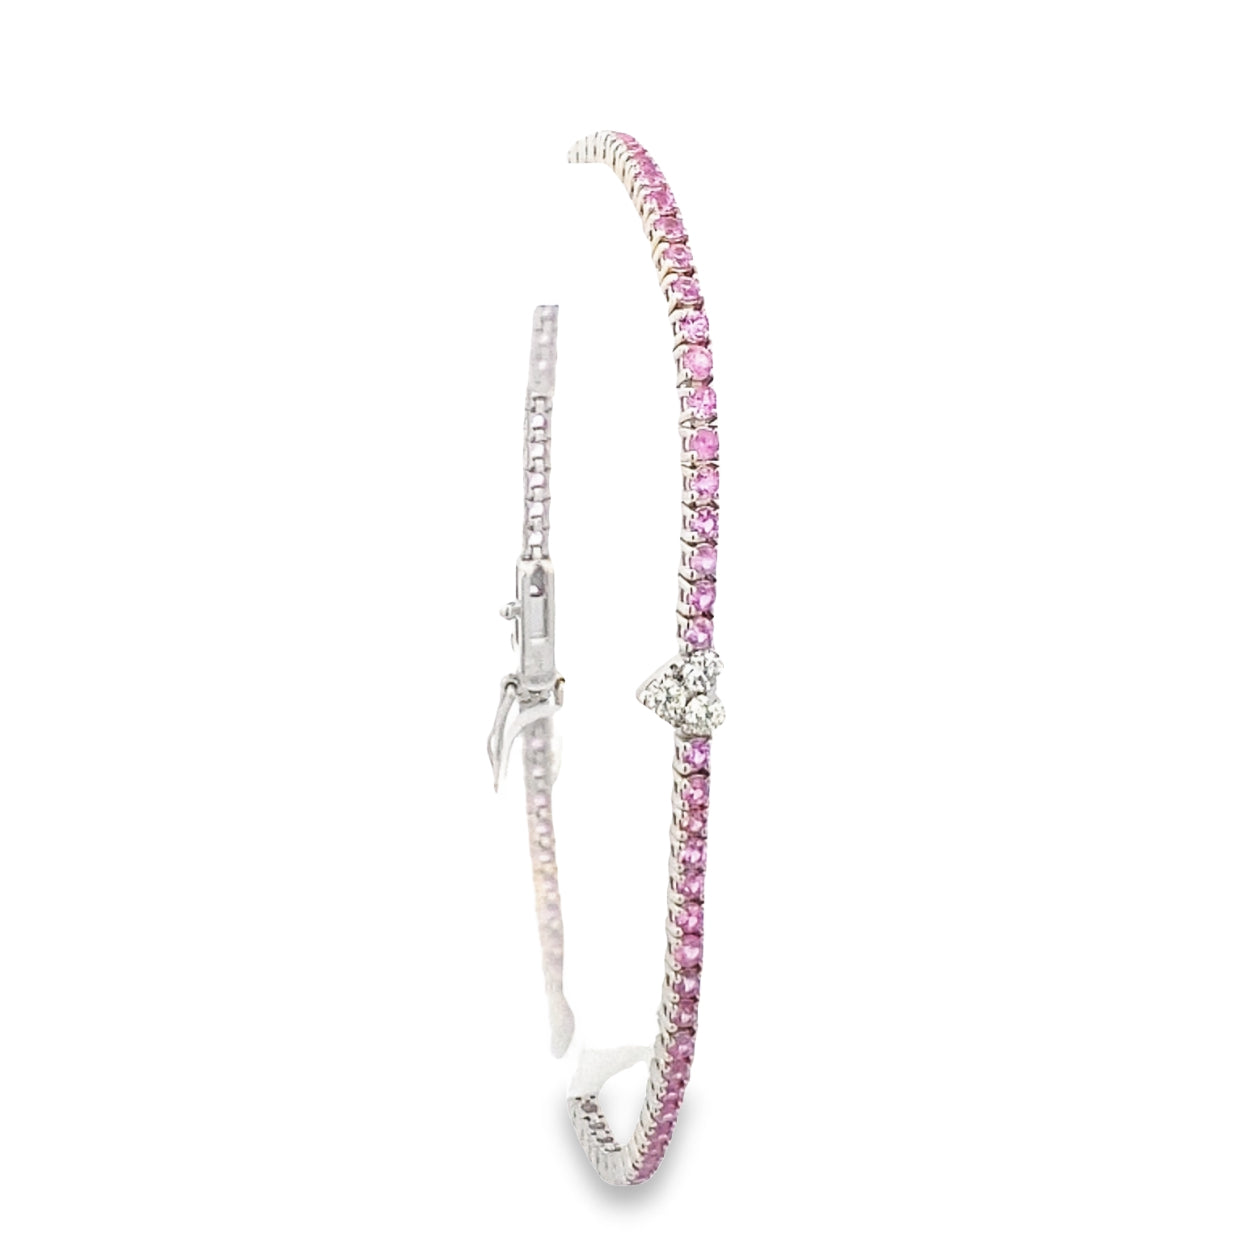 Pink Sapphire Tennis Bracelet with Heart